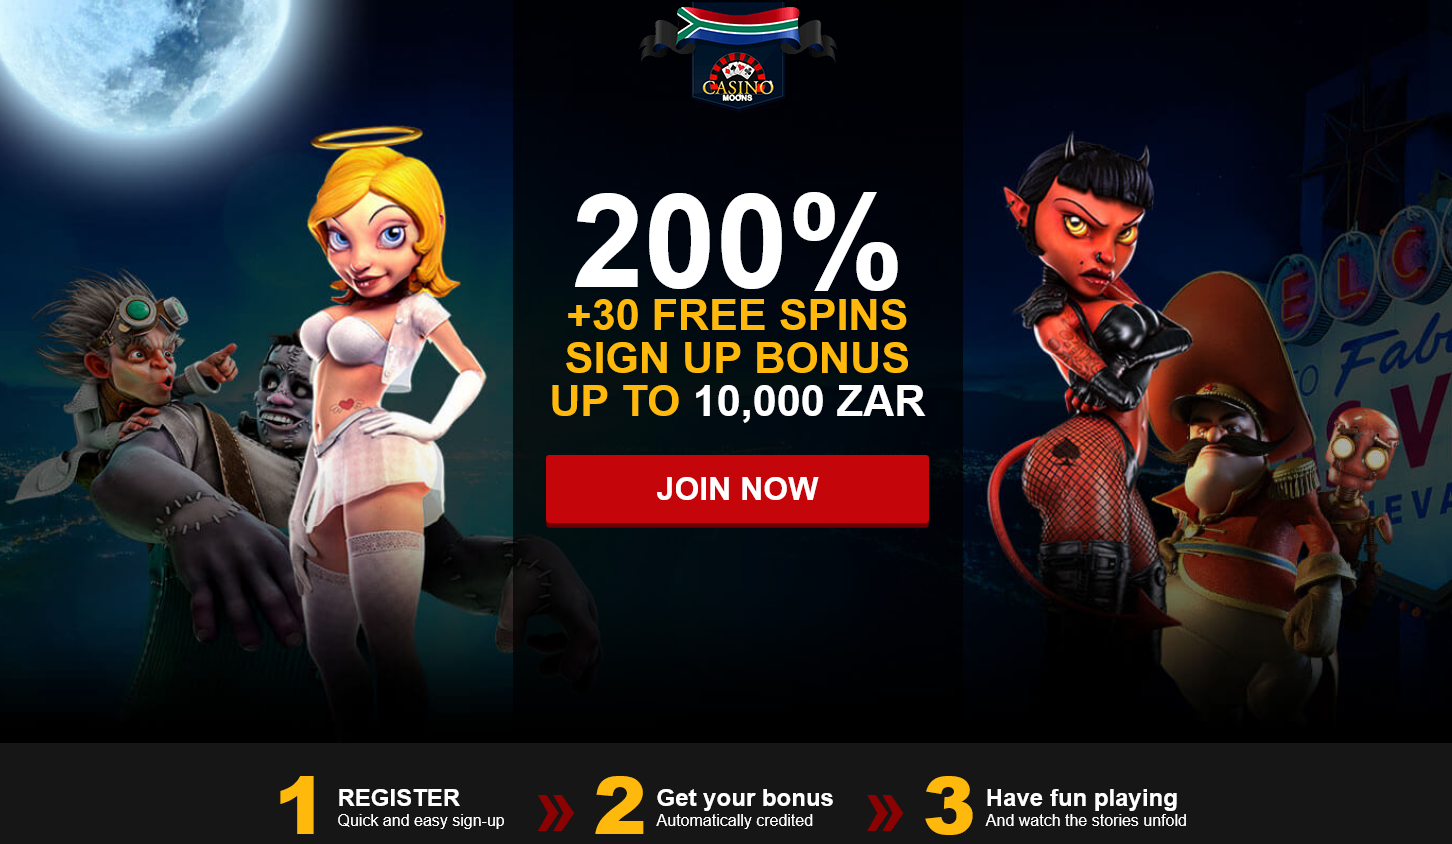 Casino Moons -200% +30 FREE SPINS SIGN UP BONUS UP TO 10,000 ZAR